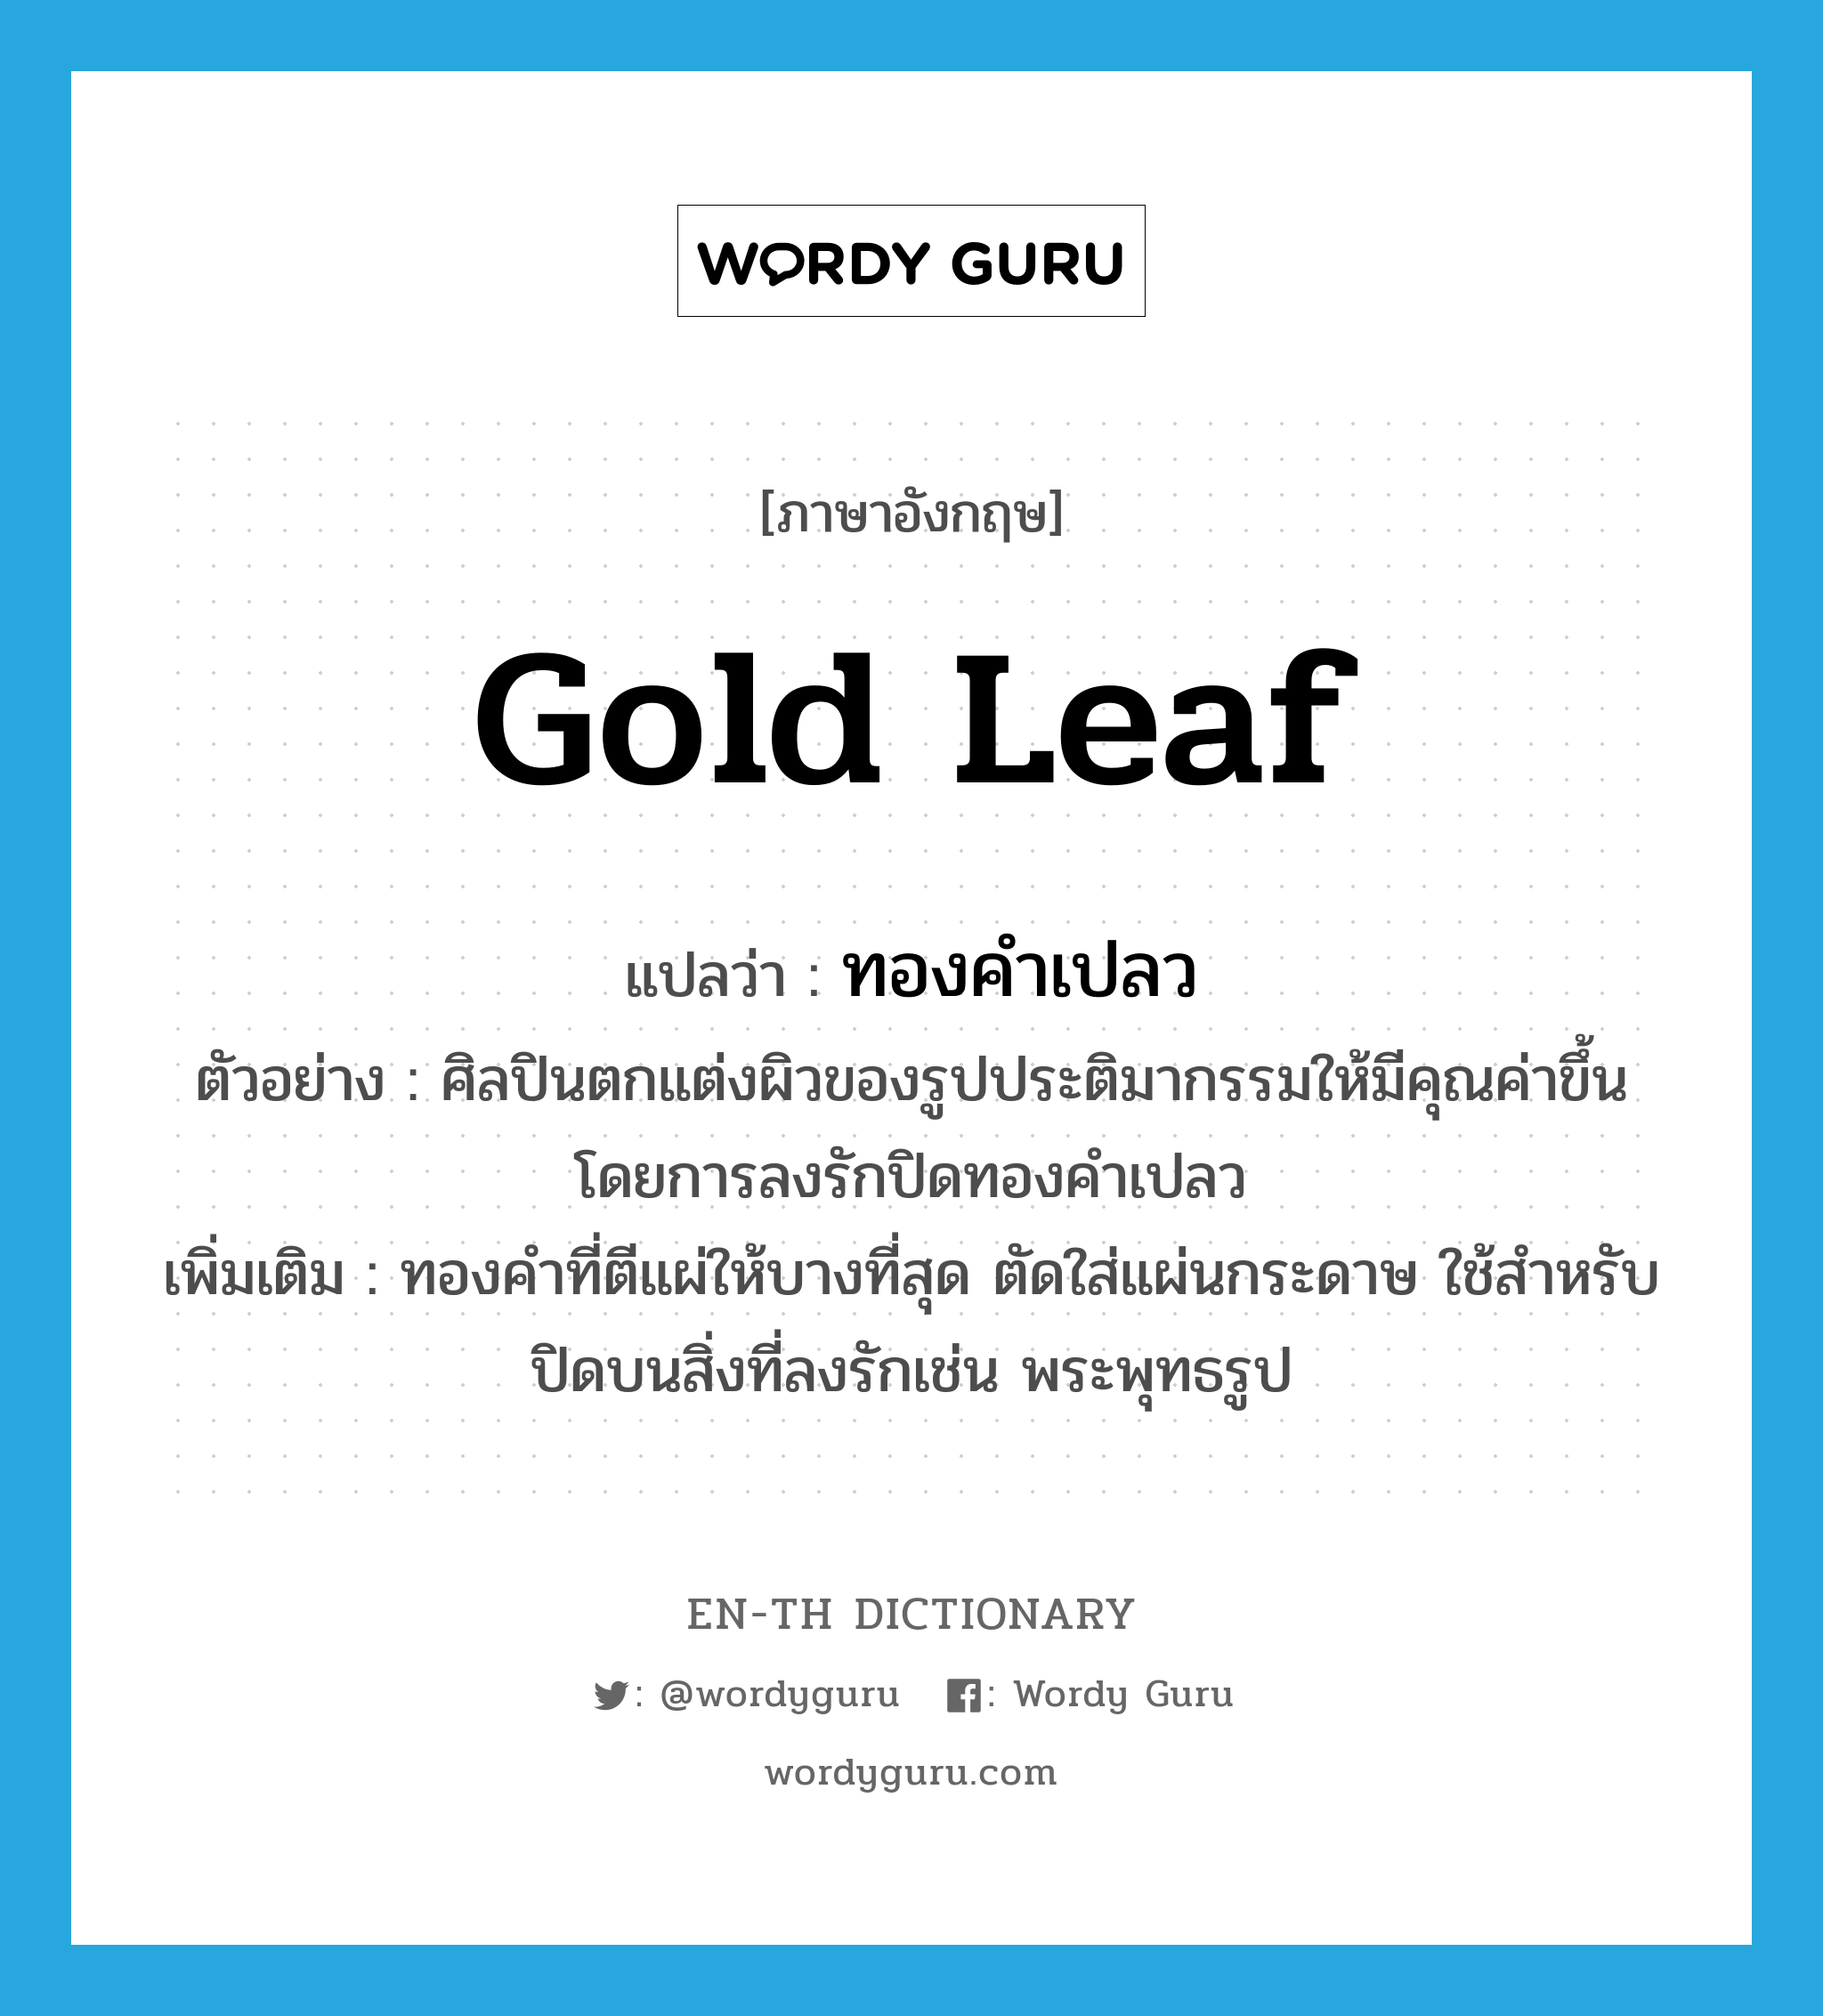 gold leaf แปลว่า?, คำศัพท์ภาษาอังกฤษ gold leaf แปลว่า ทองคำเปลว ประเภท N ตัวอย่าง ศิลปินตกแต่งผิวของรูปประติมากรรมให้มีคุณค่าขึ้น โดยการลงรักปิดทองคำเปลว เพิ่มเติม ทองคำที่ตีแผ่ให้บางที่สุด ตัดใส่แผ่นกระดาษ ใช้สำหรับปิดบนสิ่งที่ลงรักเช่น พระพุทธรูป หมวด N